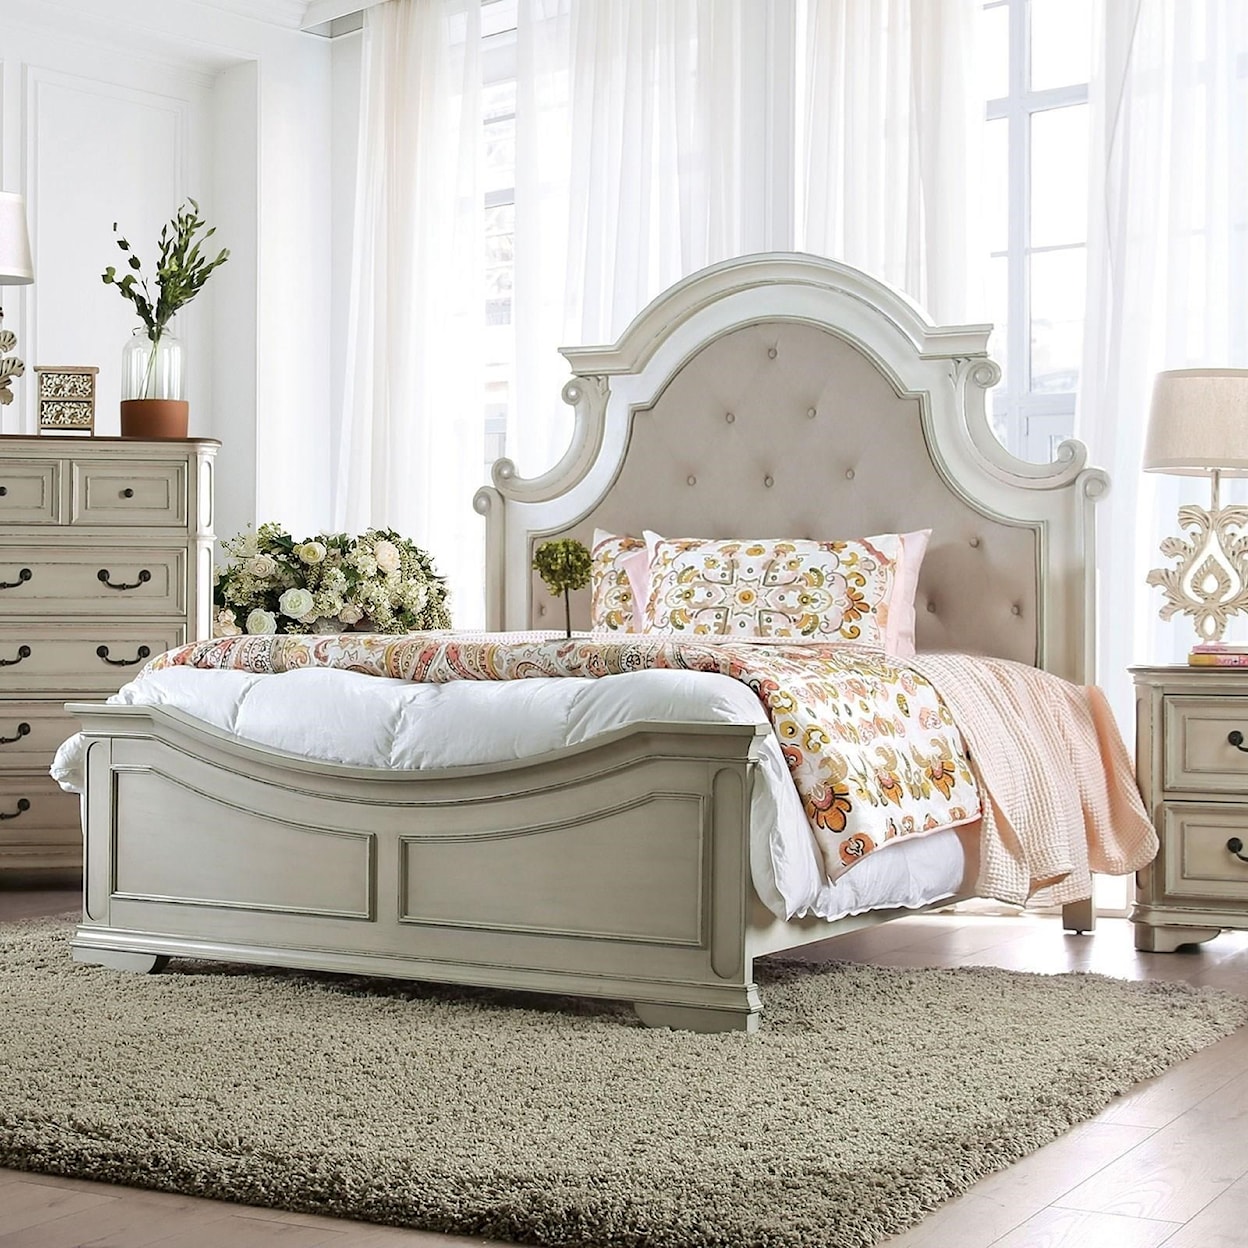 Furniture of America Pembroke Queen Bed